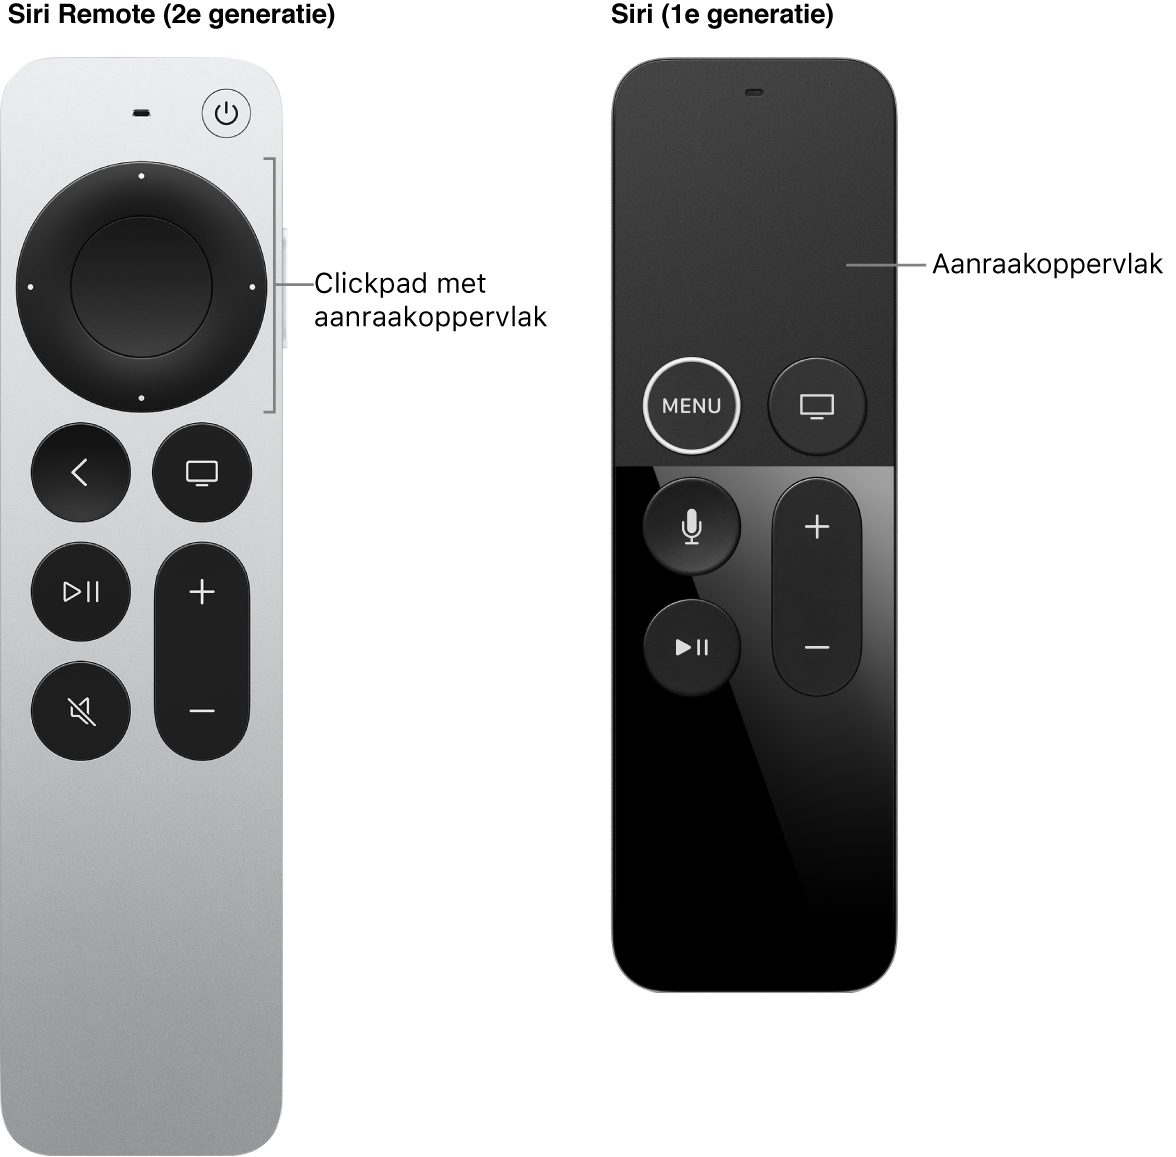 Siri Remote (2e generatie) met clickpad en Siri Remote (1e generatie) met aanraakoppervlak